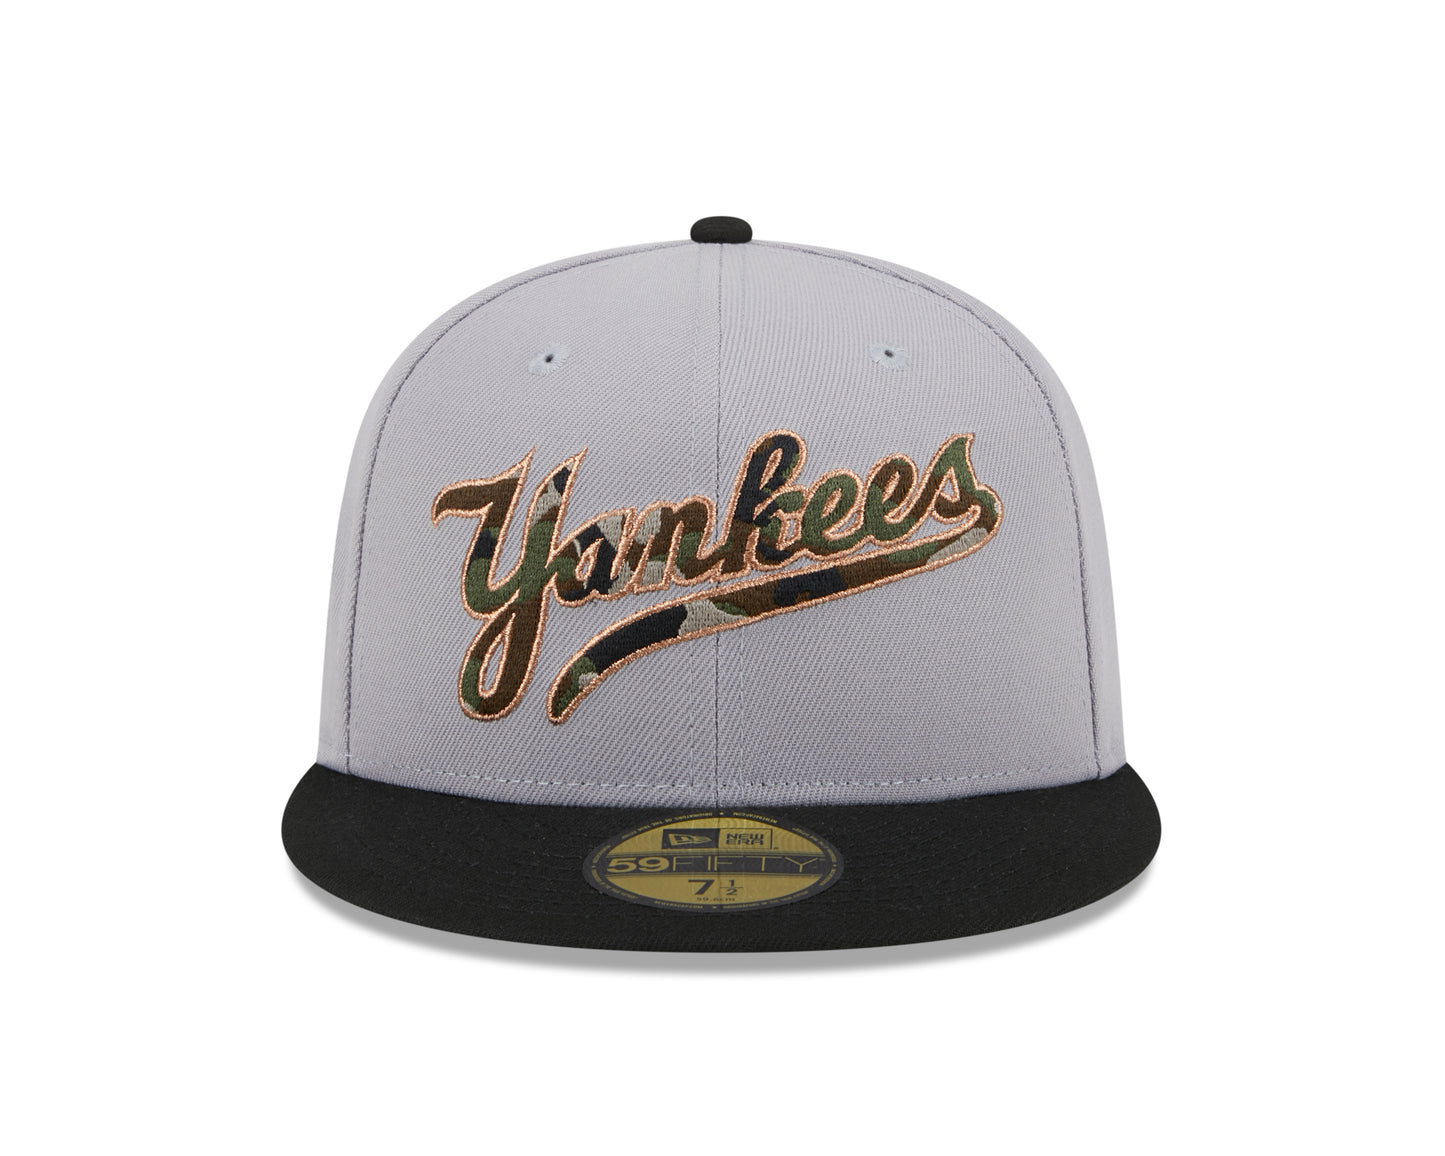 New Era - CAMO FILL - New York Yankees - Grey - Headz Up 